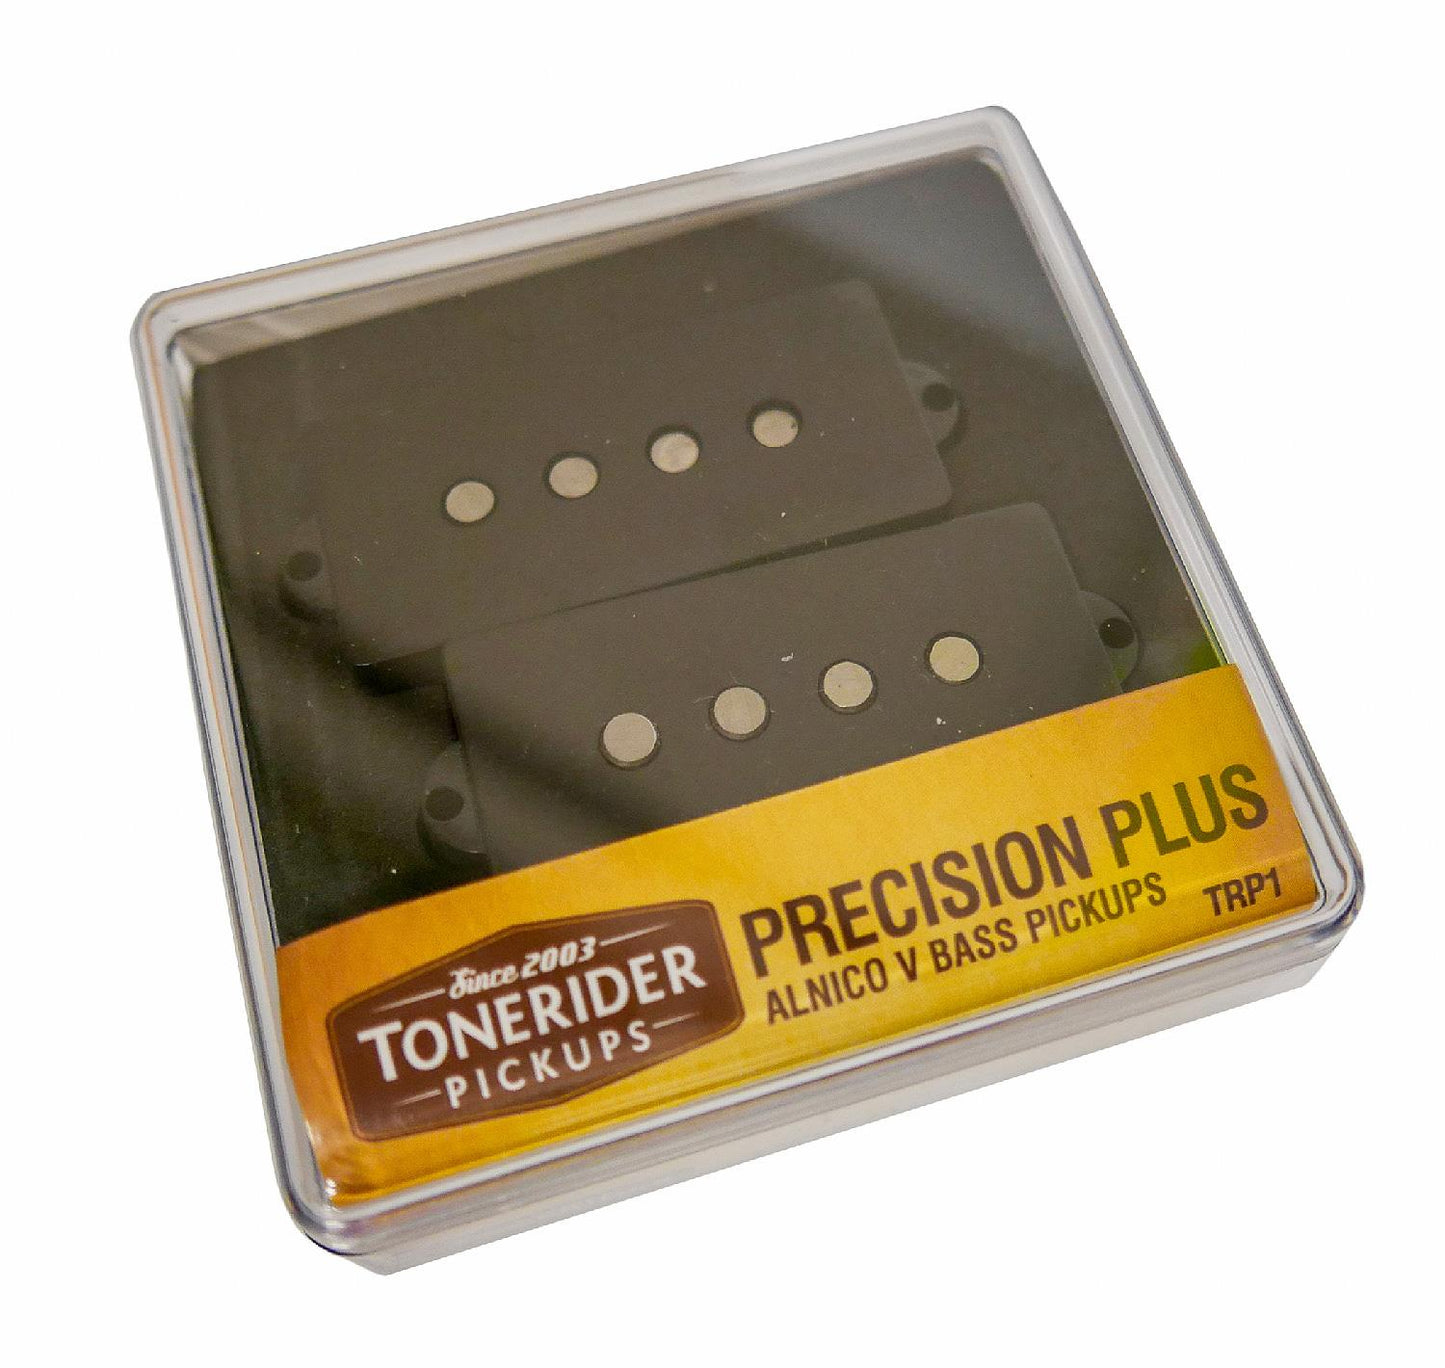 Tonerider Precision Plus Neck/Bridge Pickups for Precision Bass